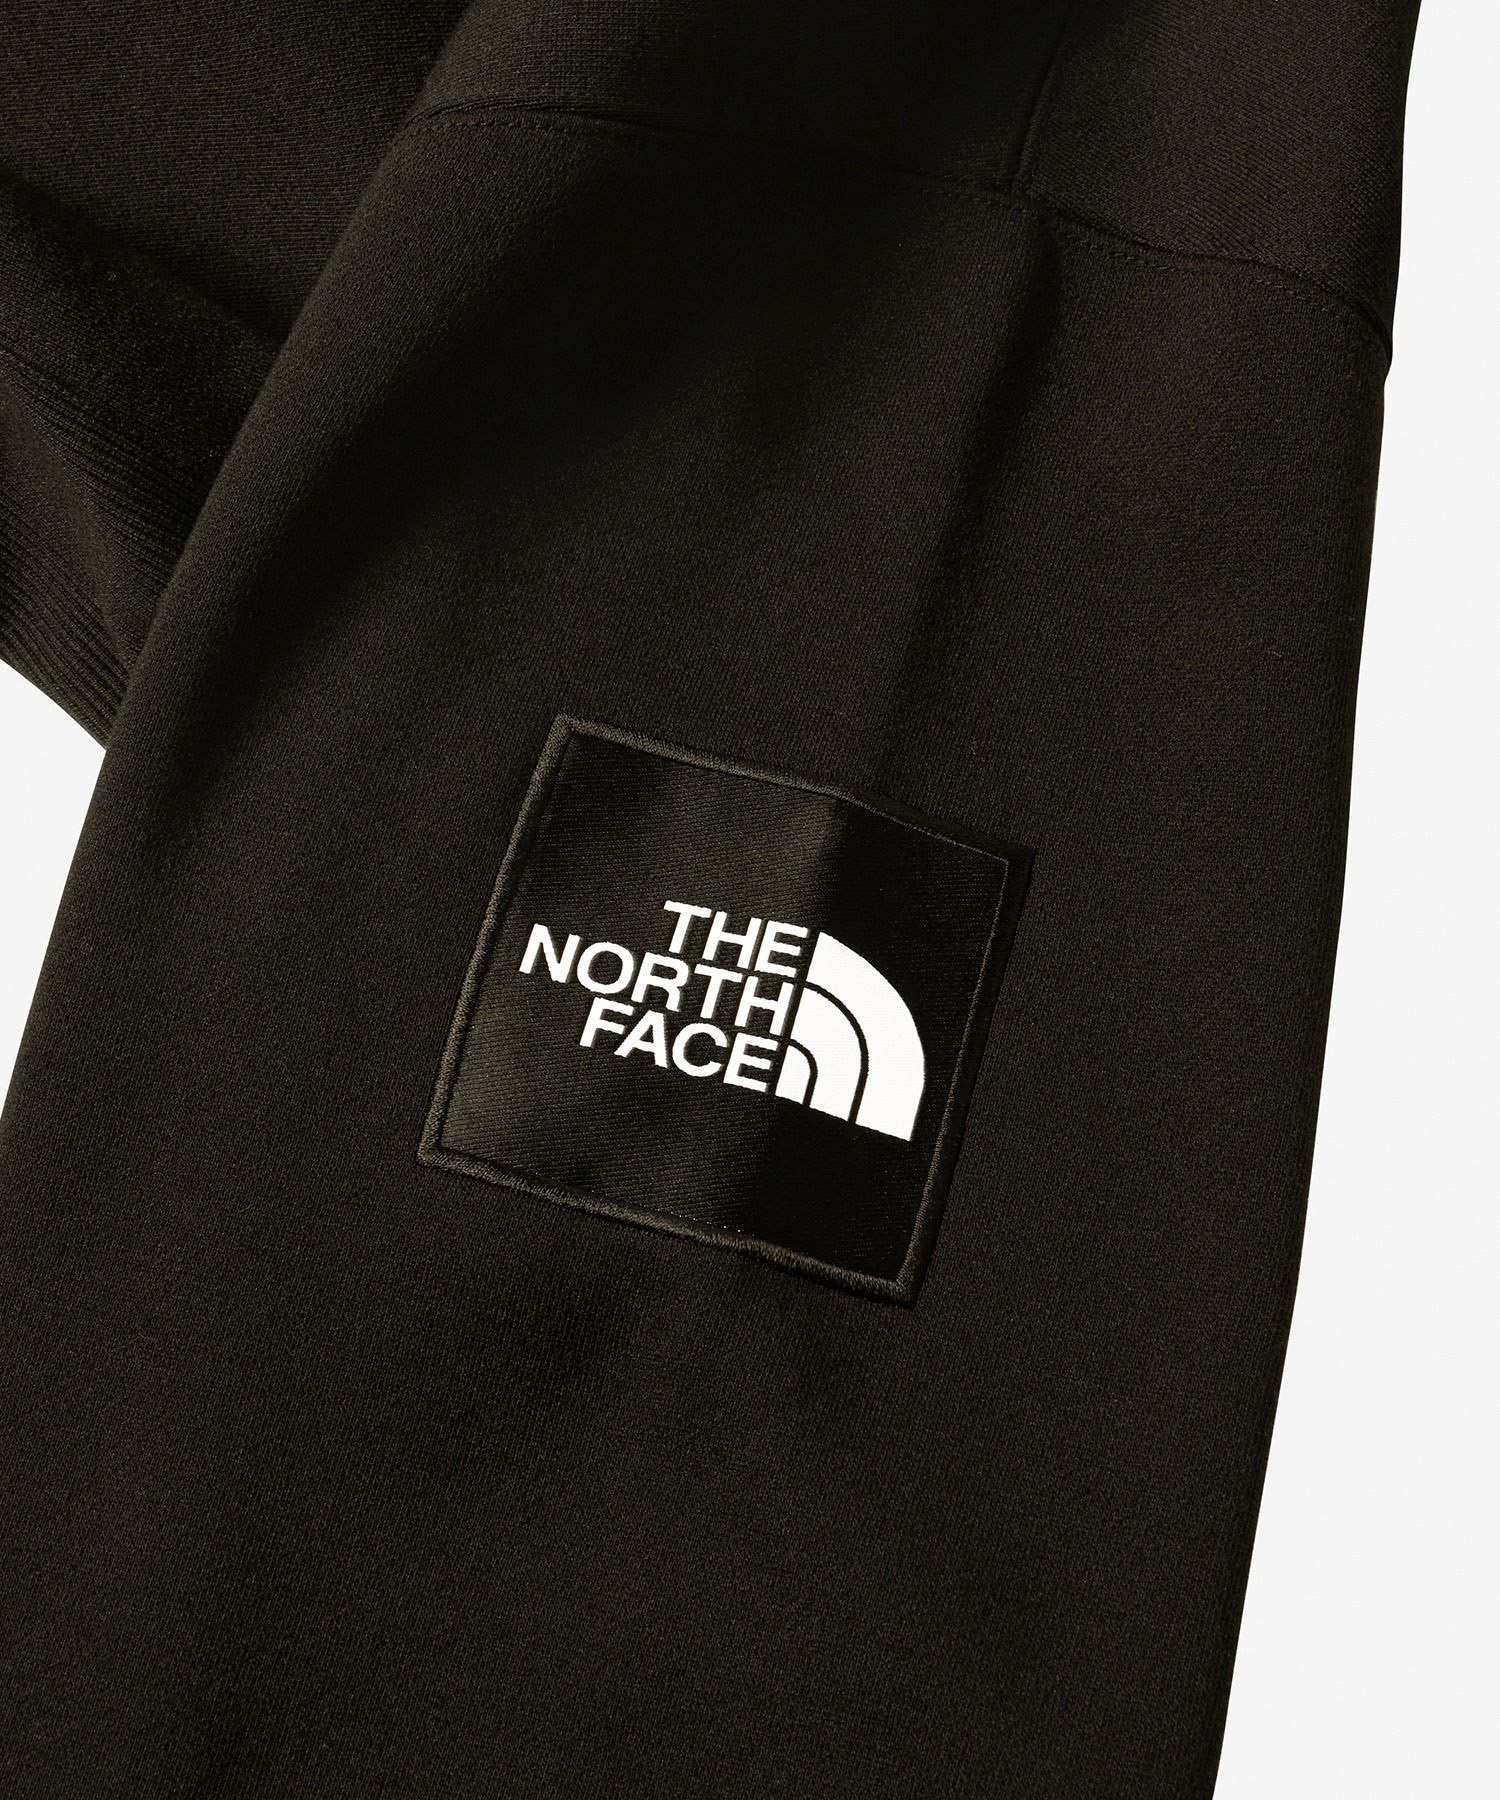 THE NORTH FACE/ザ・ノース・フェイス Square Logo Hoodie スクエアロゴフーディ メンズ パーカー プルオーバー 裏起毛 NT62338 K(K-S)